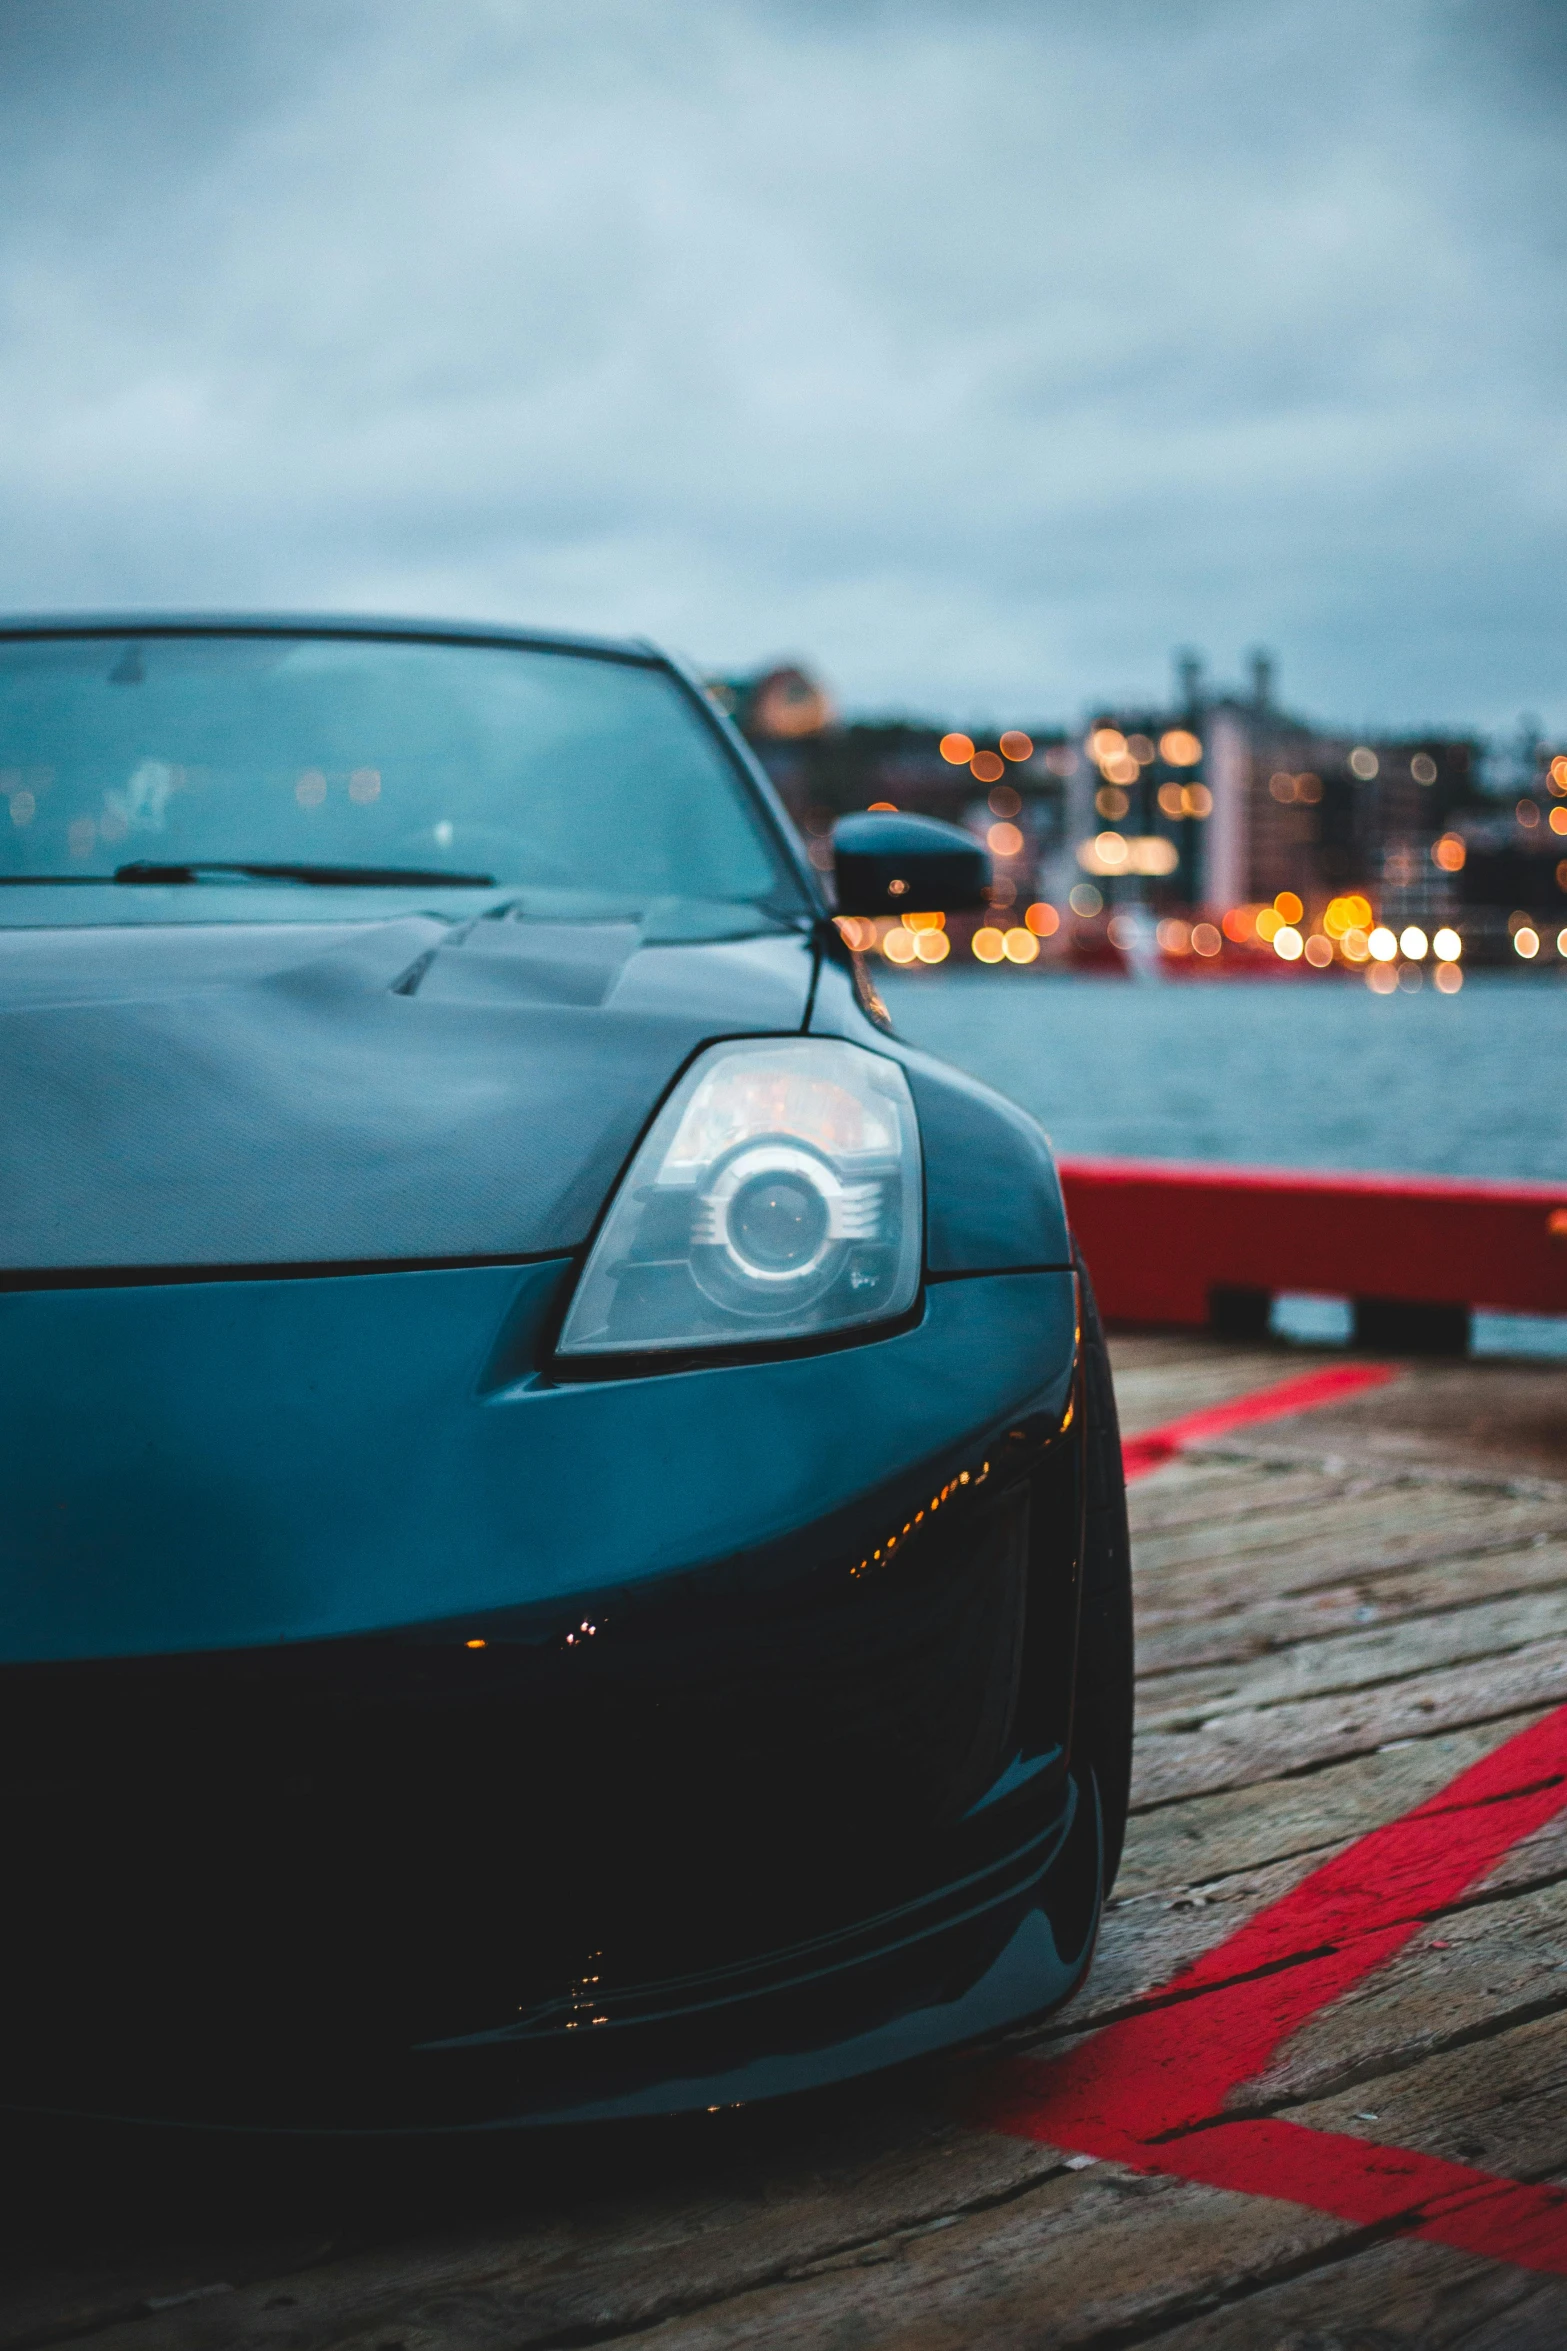 the hood of a sleek sports car on the dock